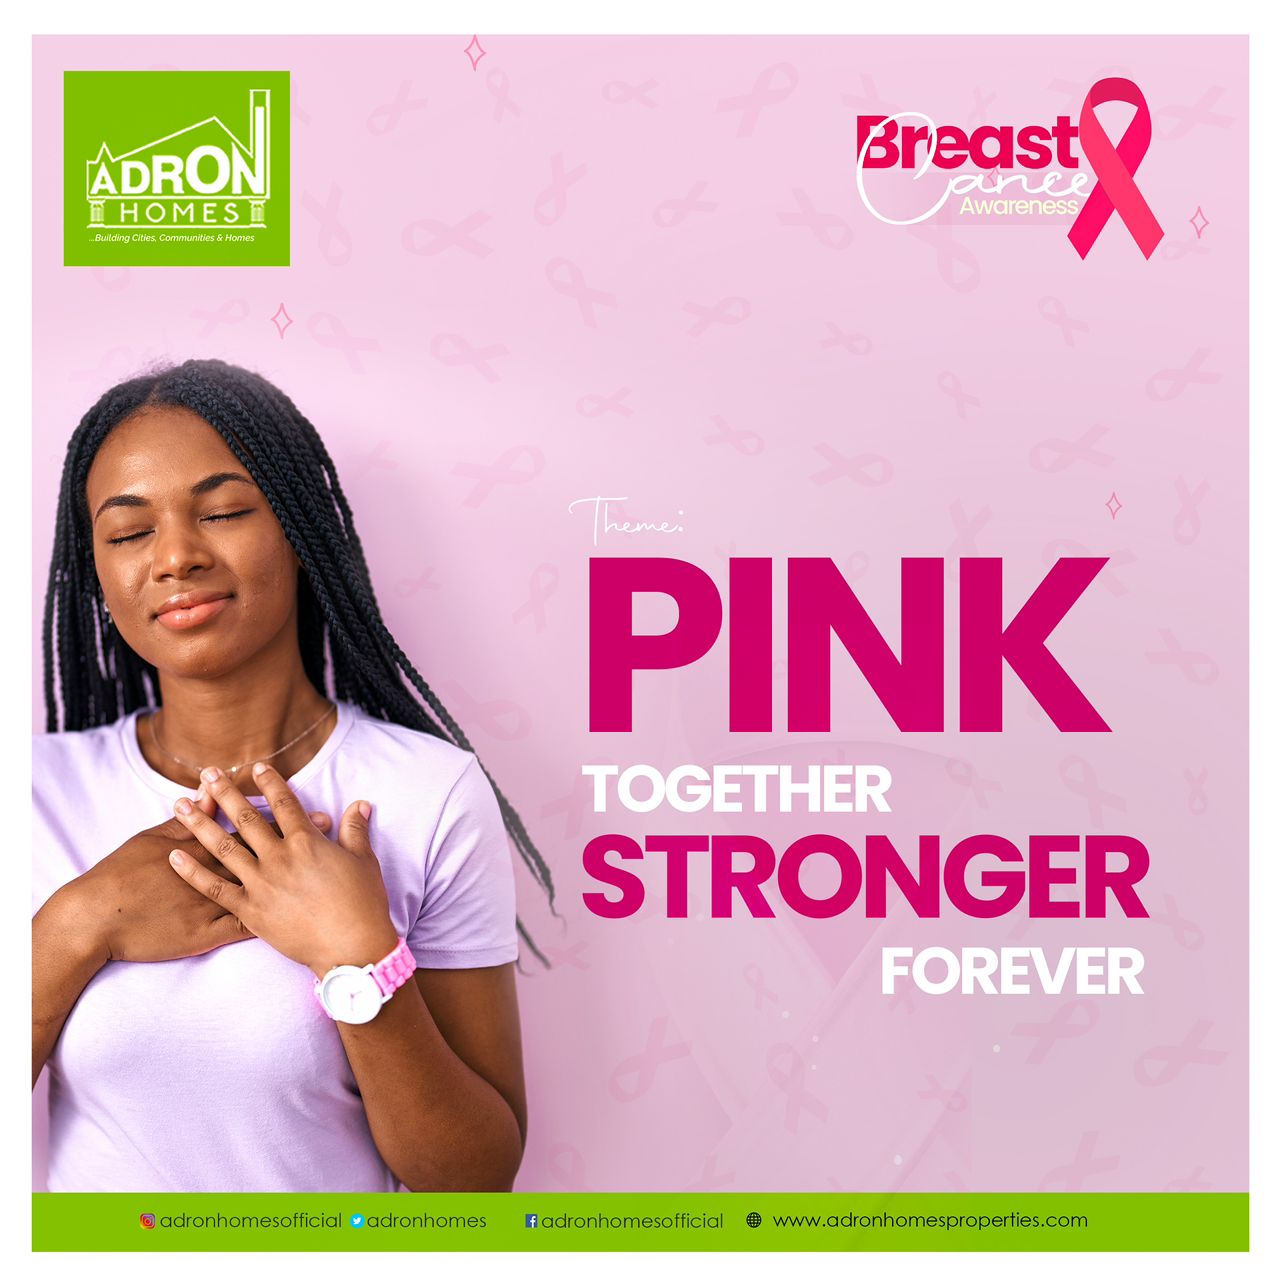 Adron Homes Raises Breast Cancer Awareness Among Women, Screen Staff